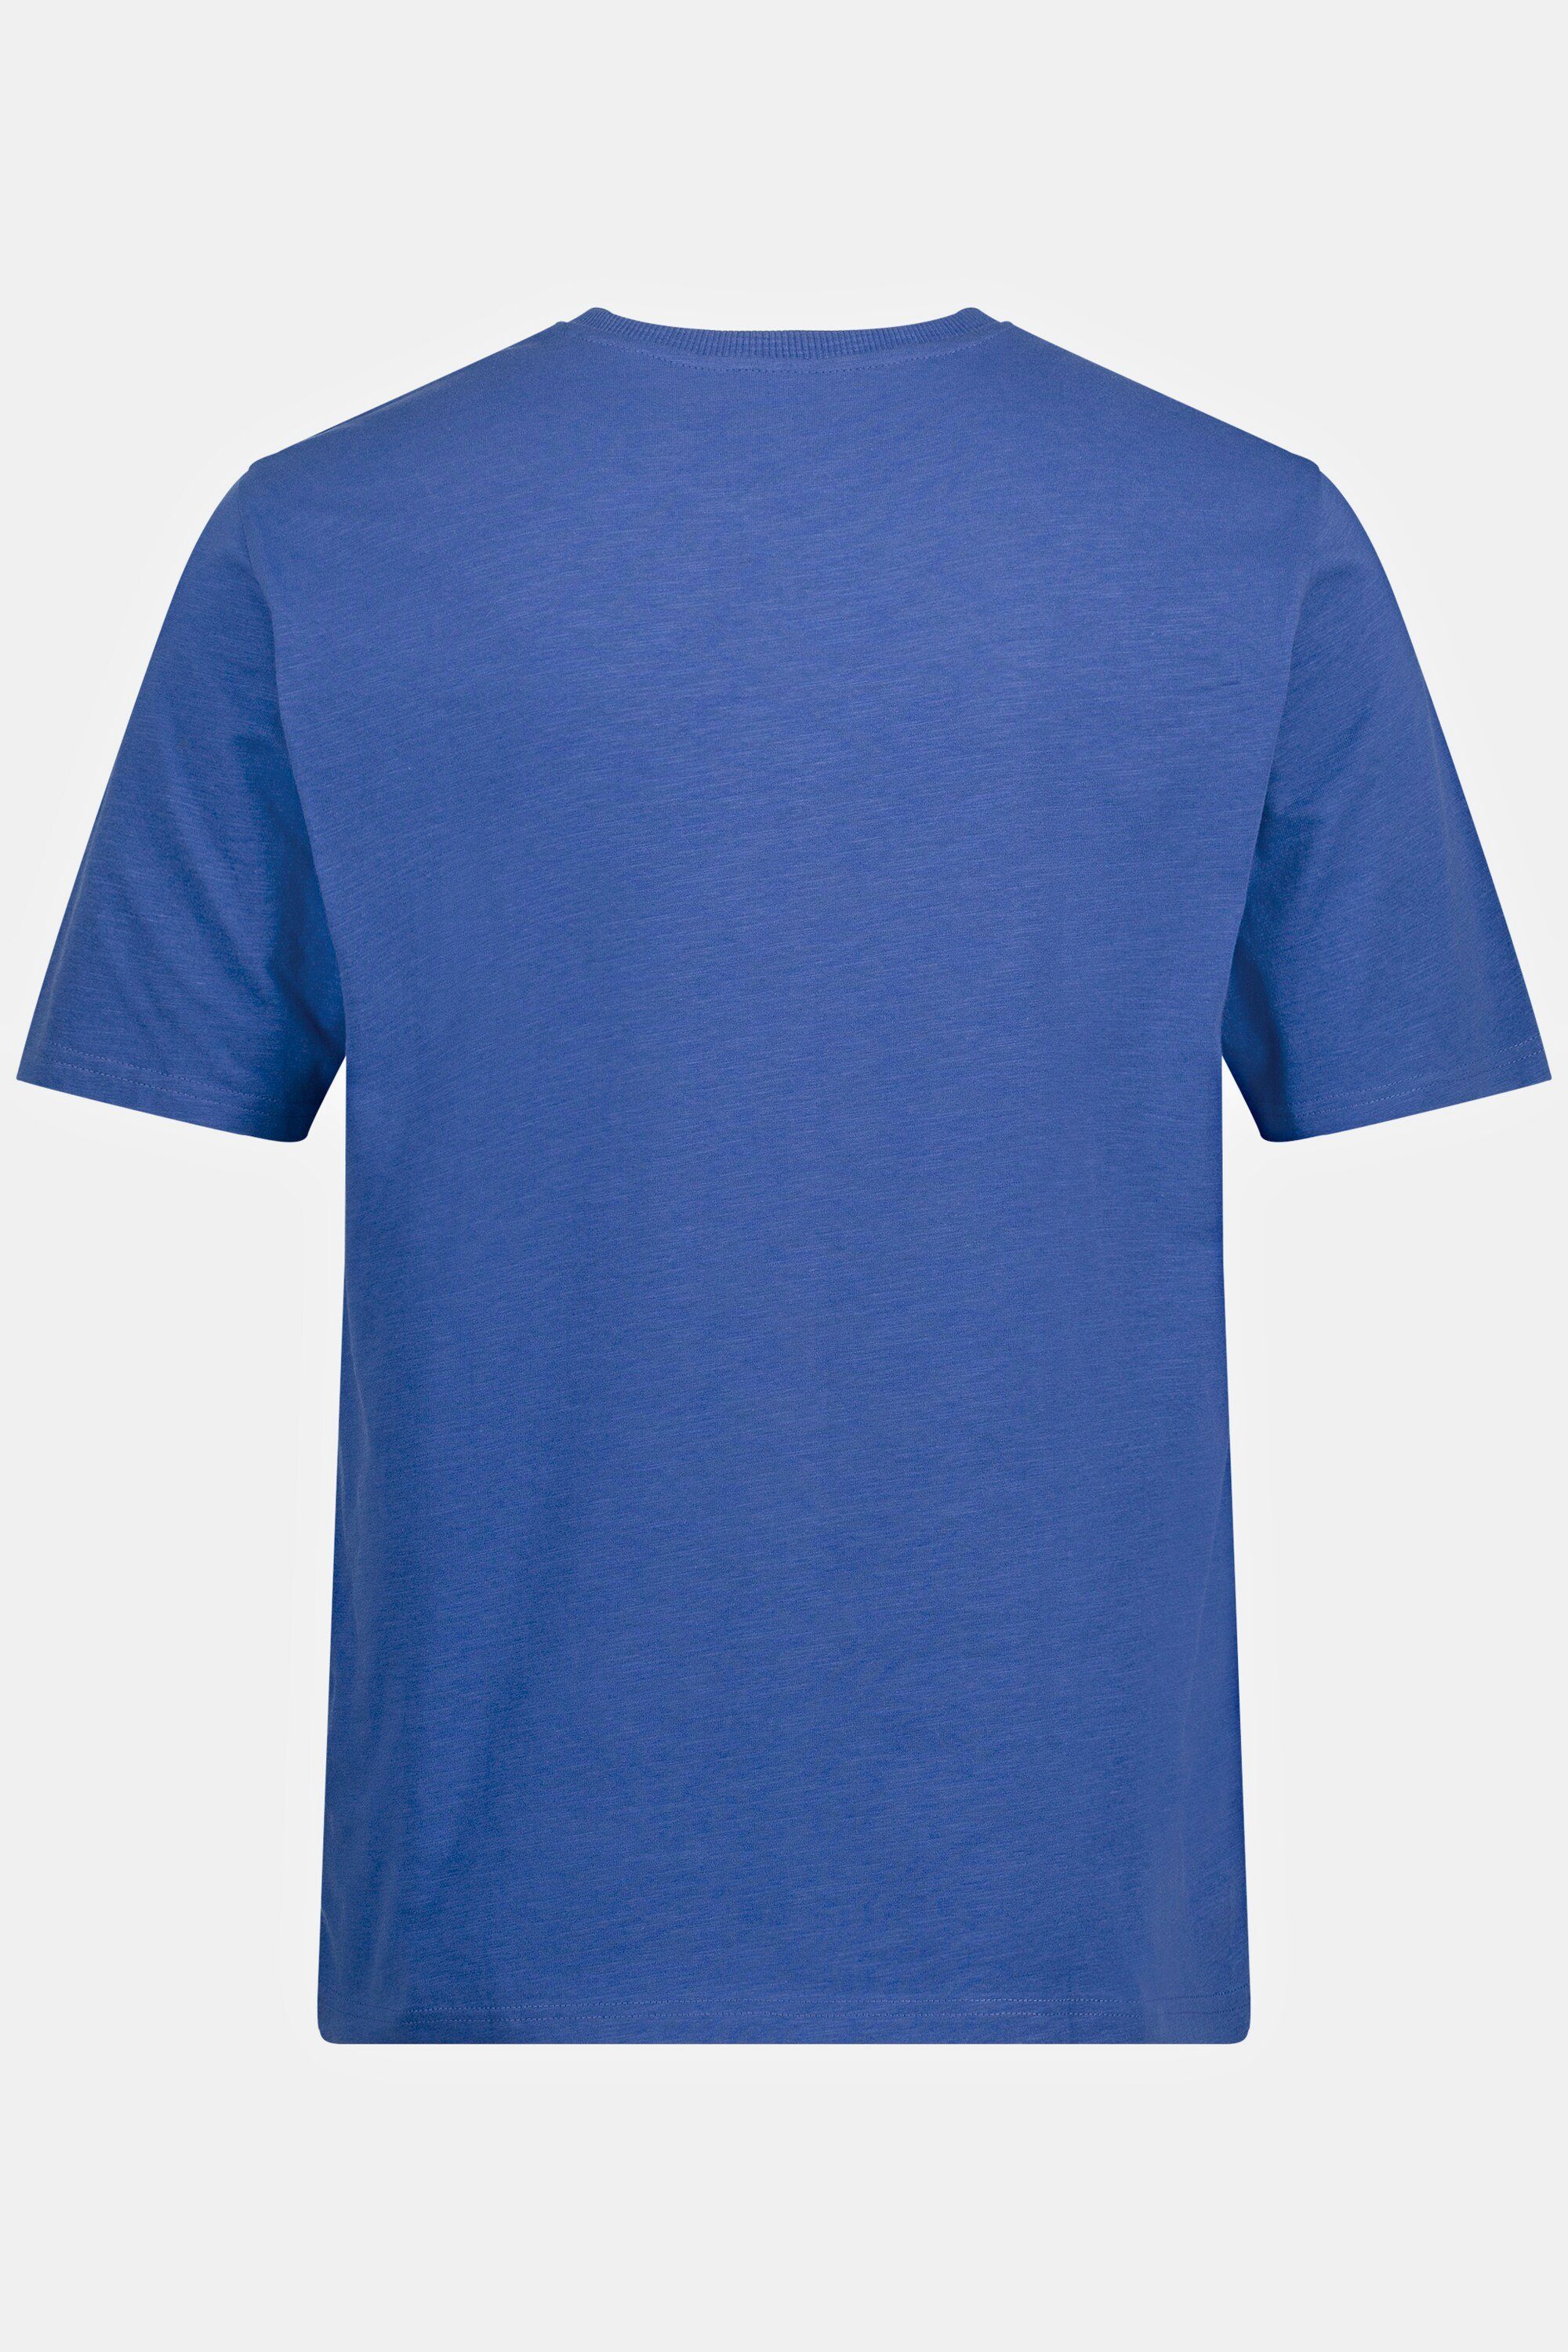 T-Shirt blau T-Shirt JP1880 Halbarm V-Ausschnitt